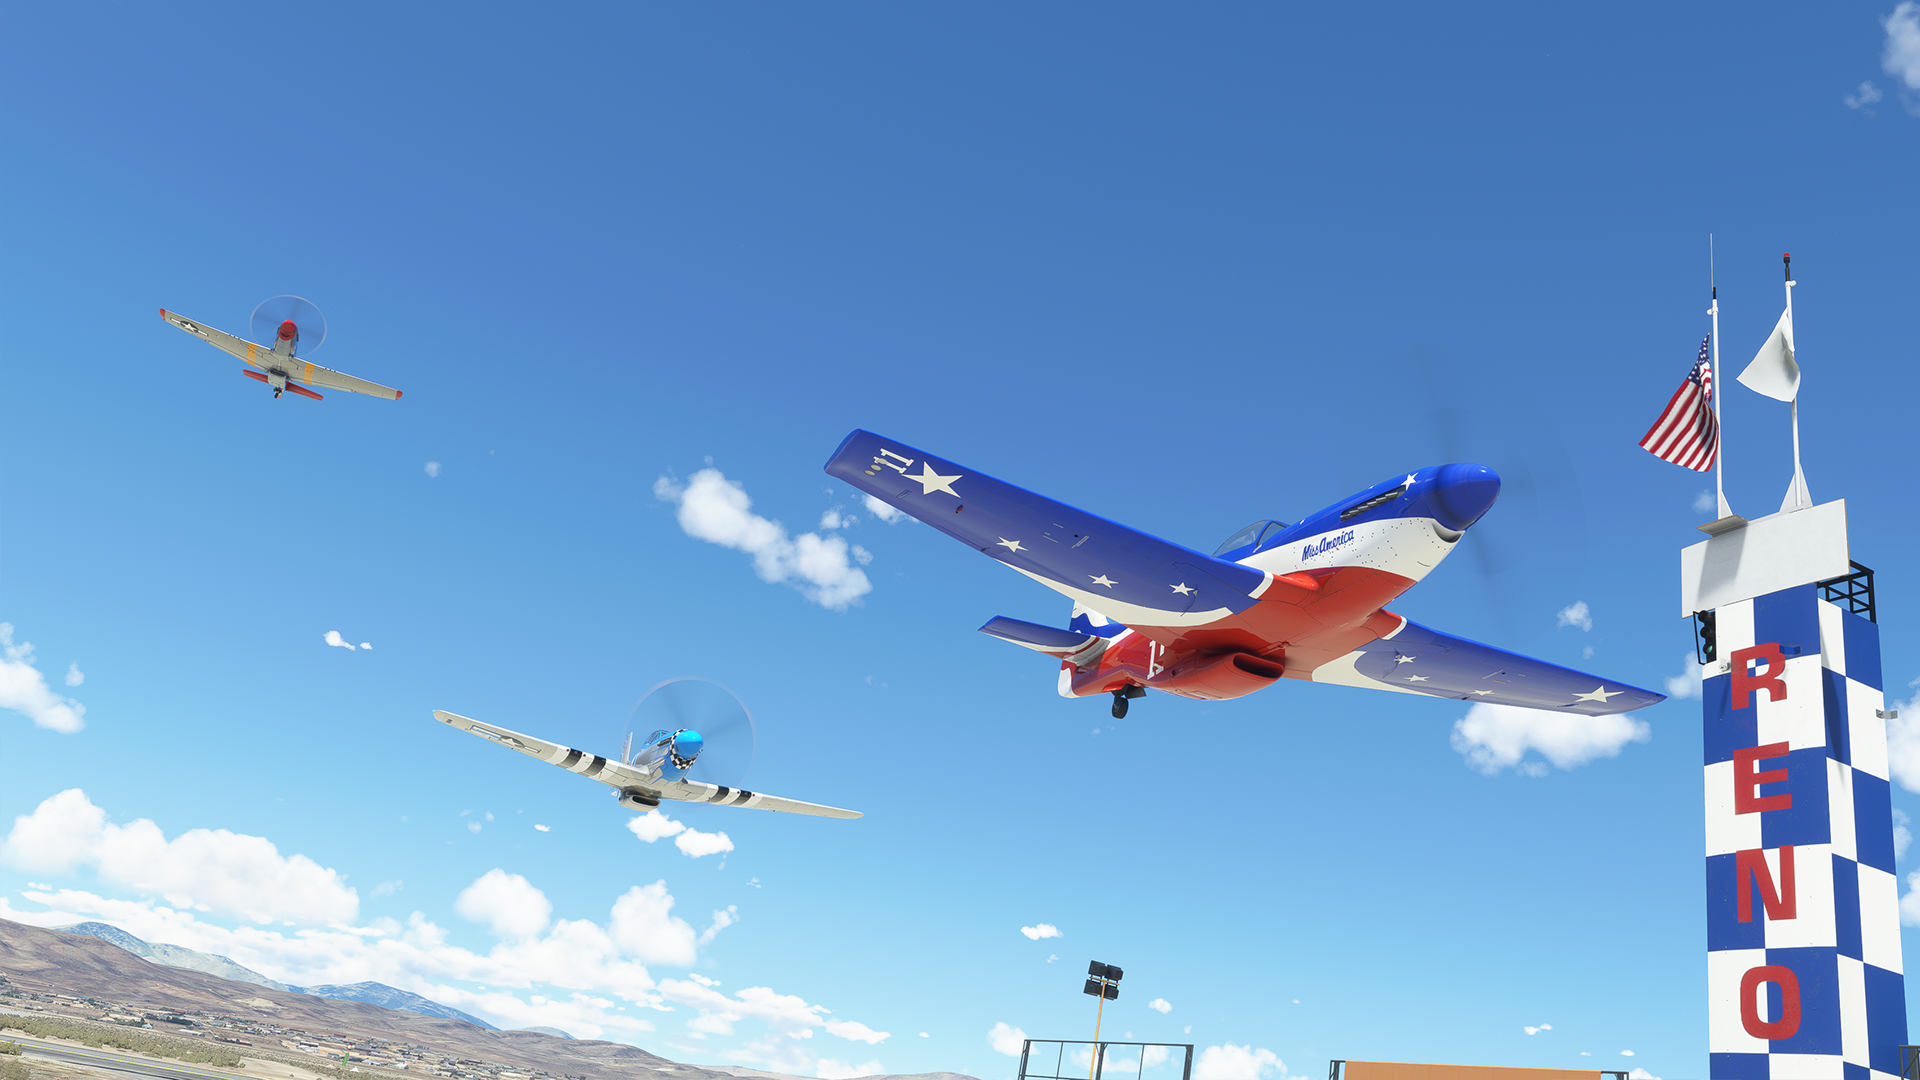 Microsoft Flight Simulator – Reno Air Races Expansion Pack